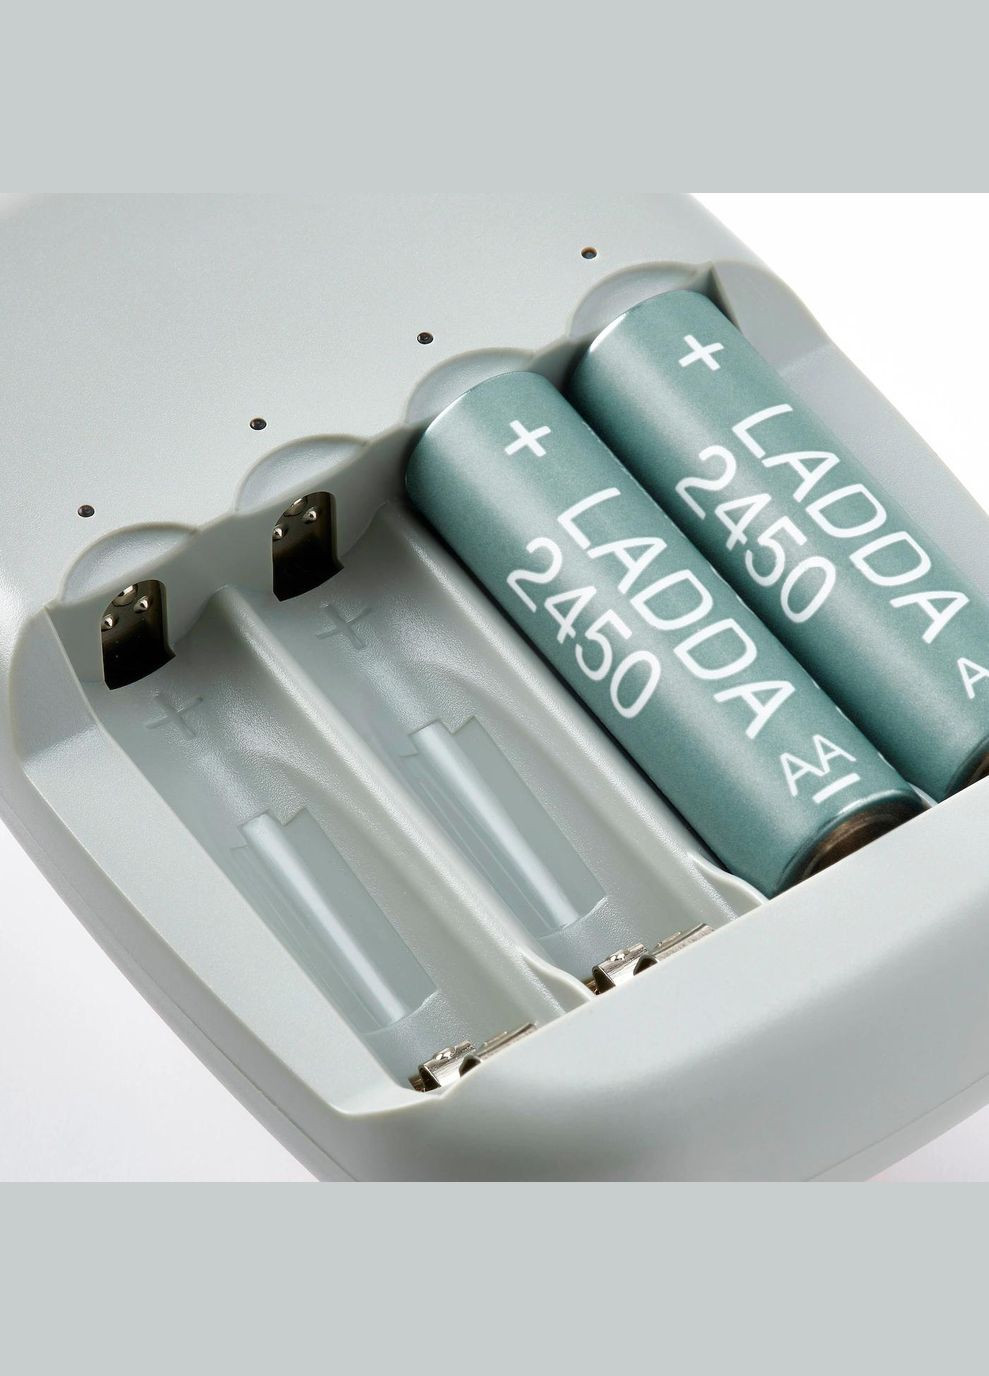 Акумуляторна батарея ІКЕА LADDA 2450 мАг HR06AA 1,2 В (50504692) IKEA (284117817)